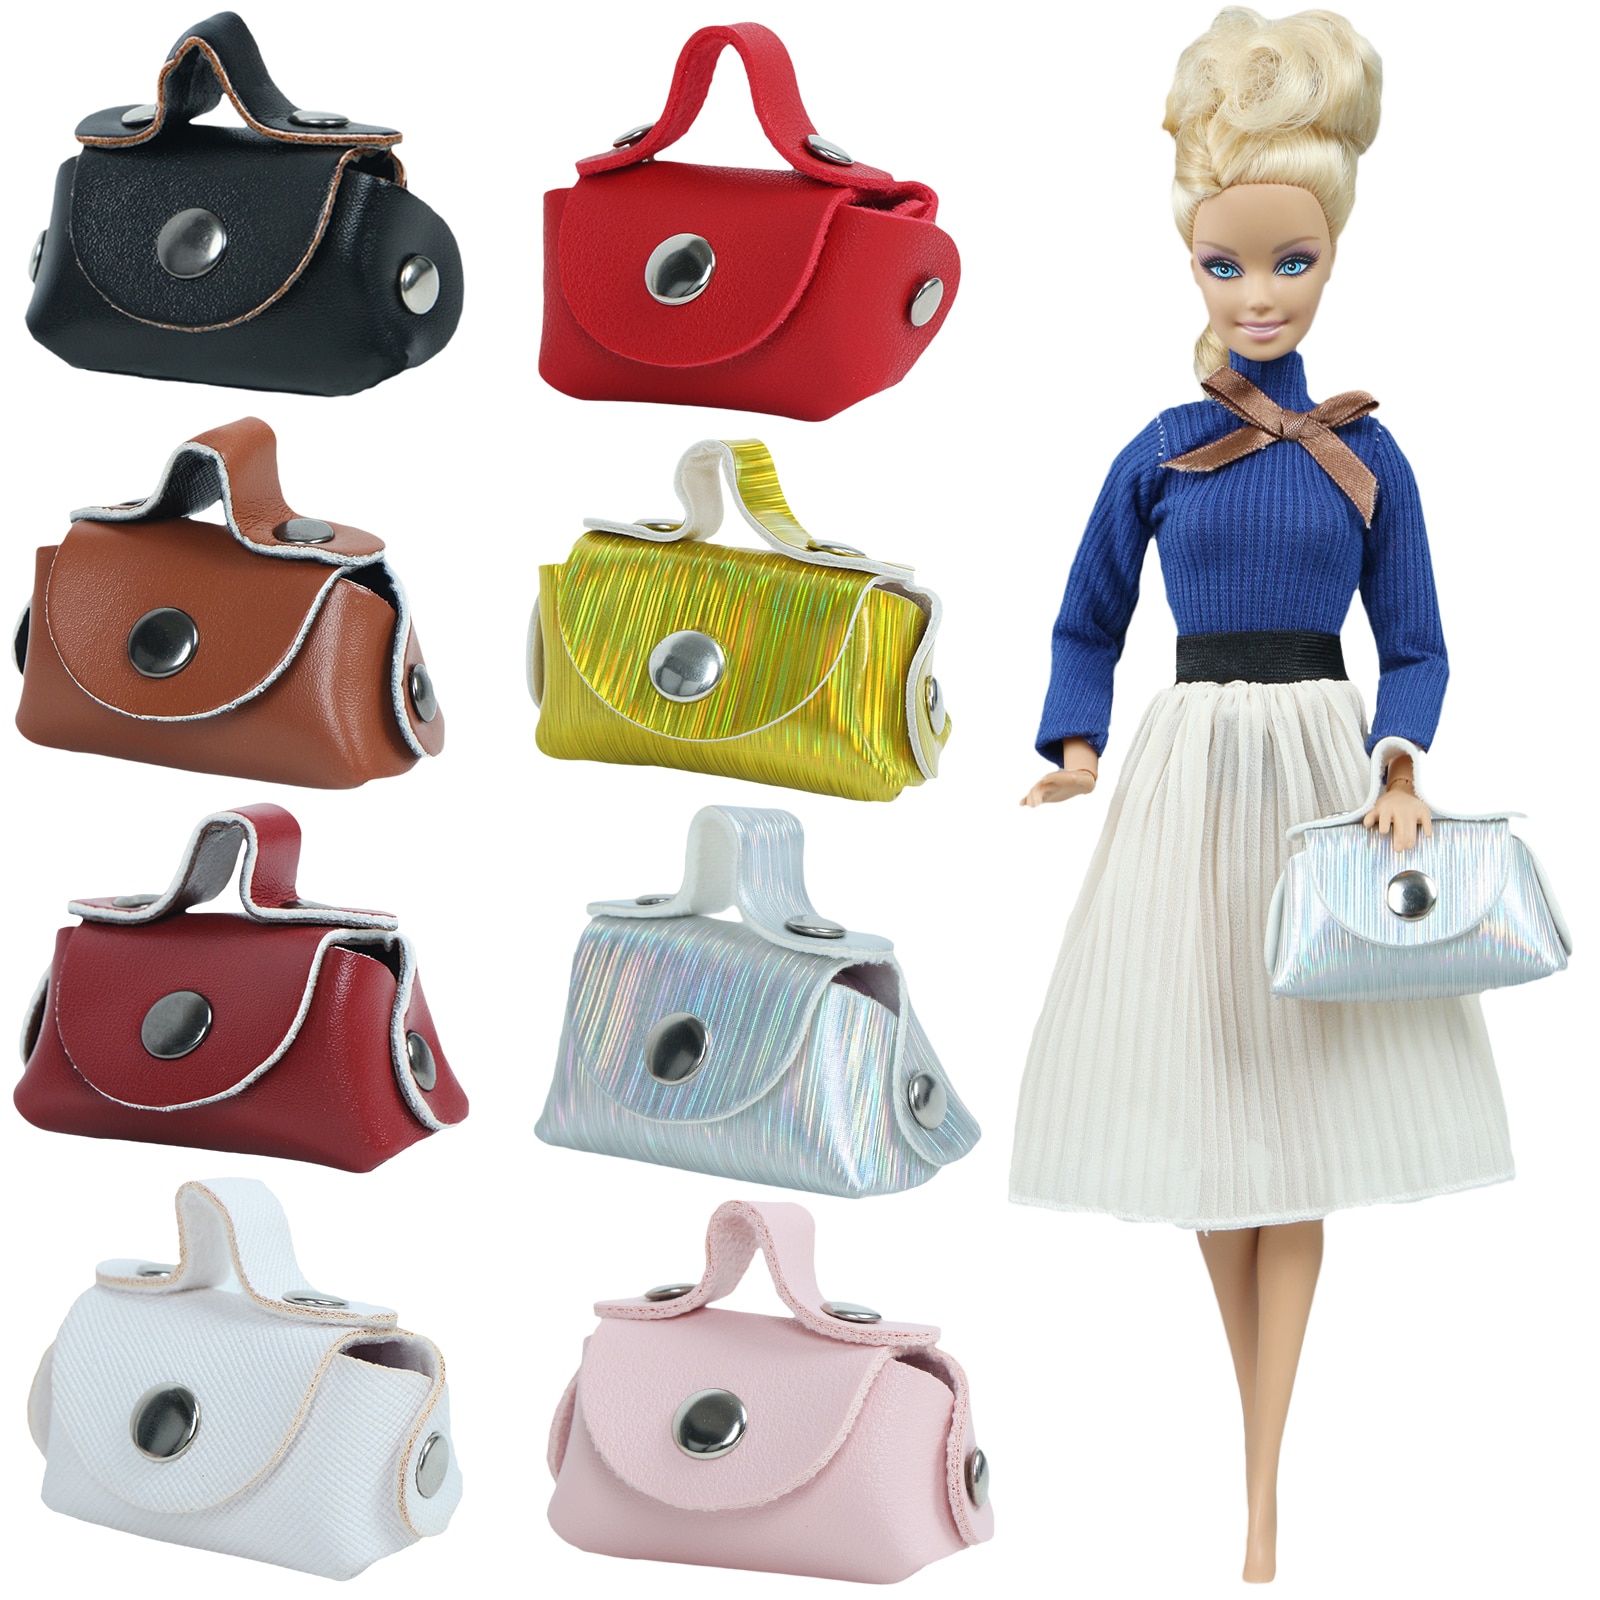 1 Pcs Fashion Lady Leather Bag Fashion Purse Cloth Bright Handbag Dress Accessories Clothes for Barbie Doll House Girl Toys